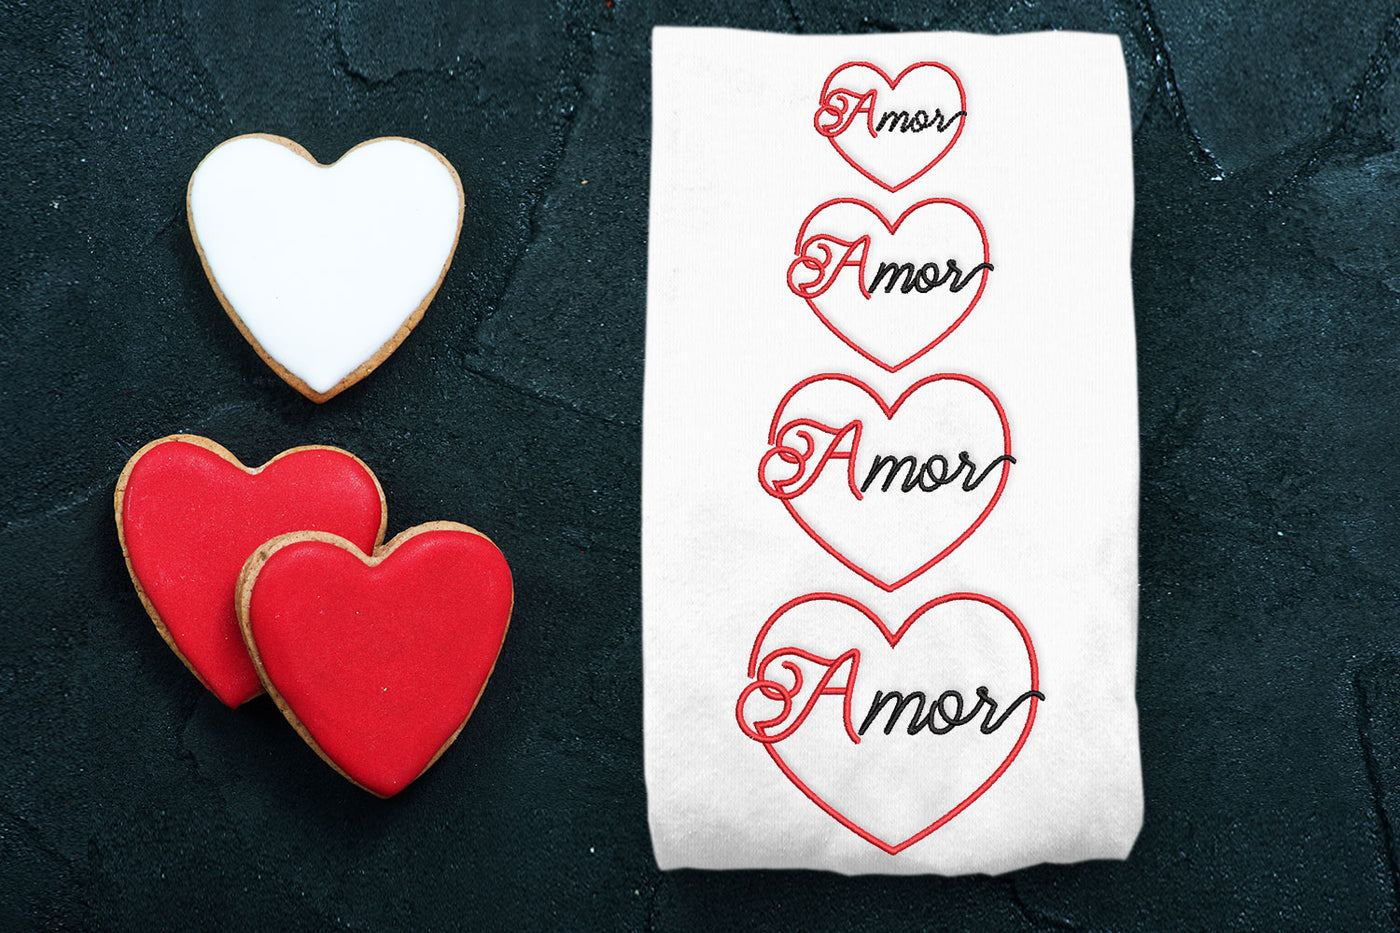 Amor heart mini embroidery design file